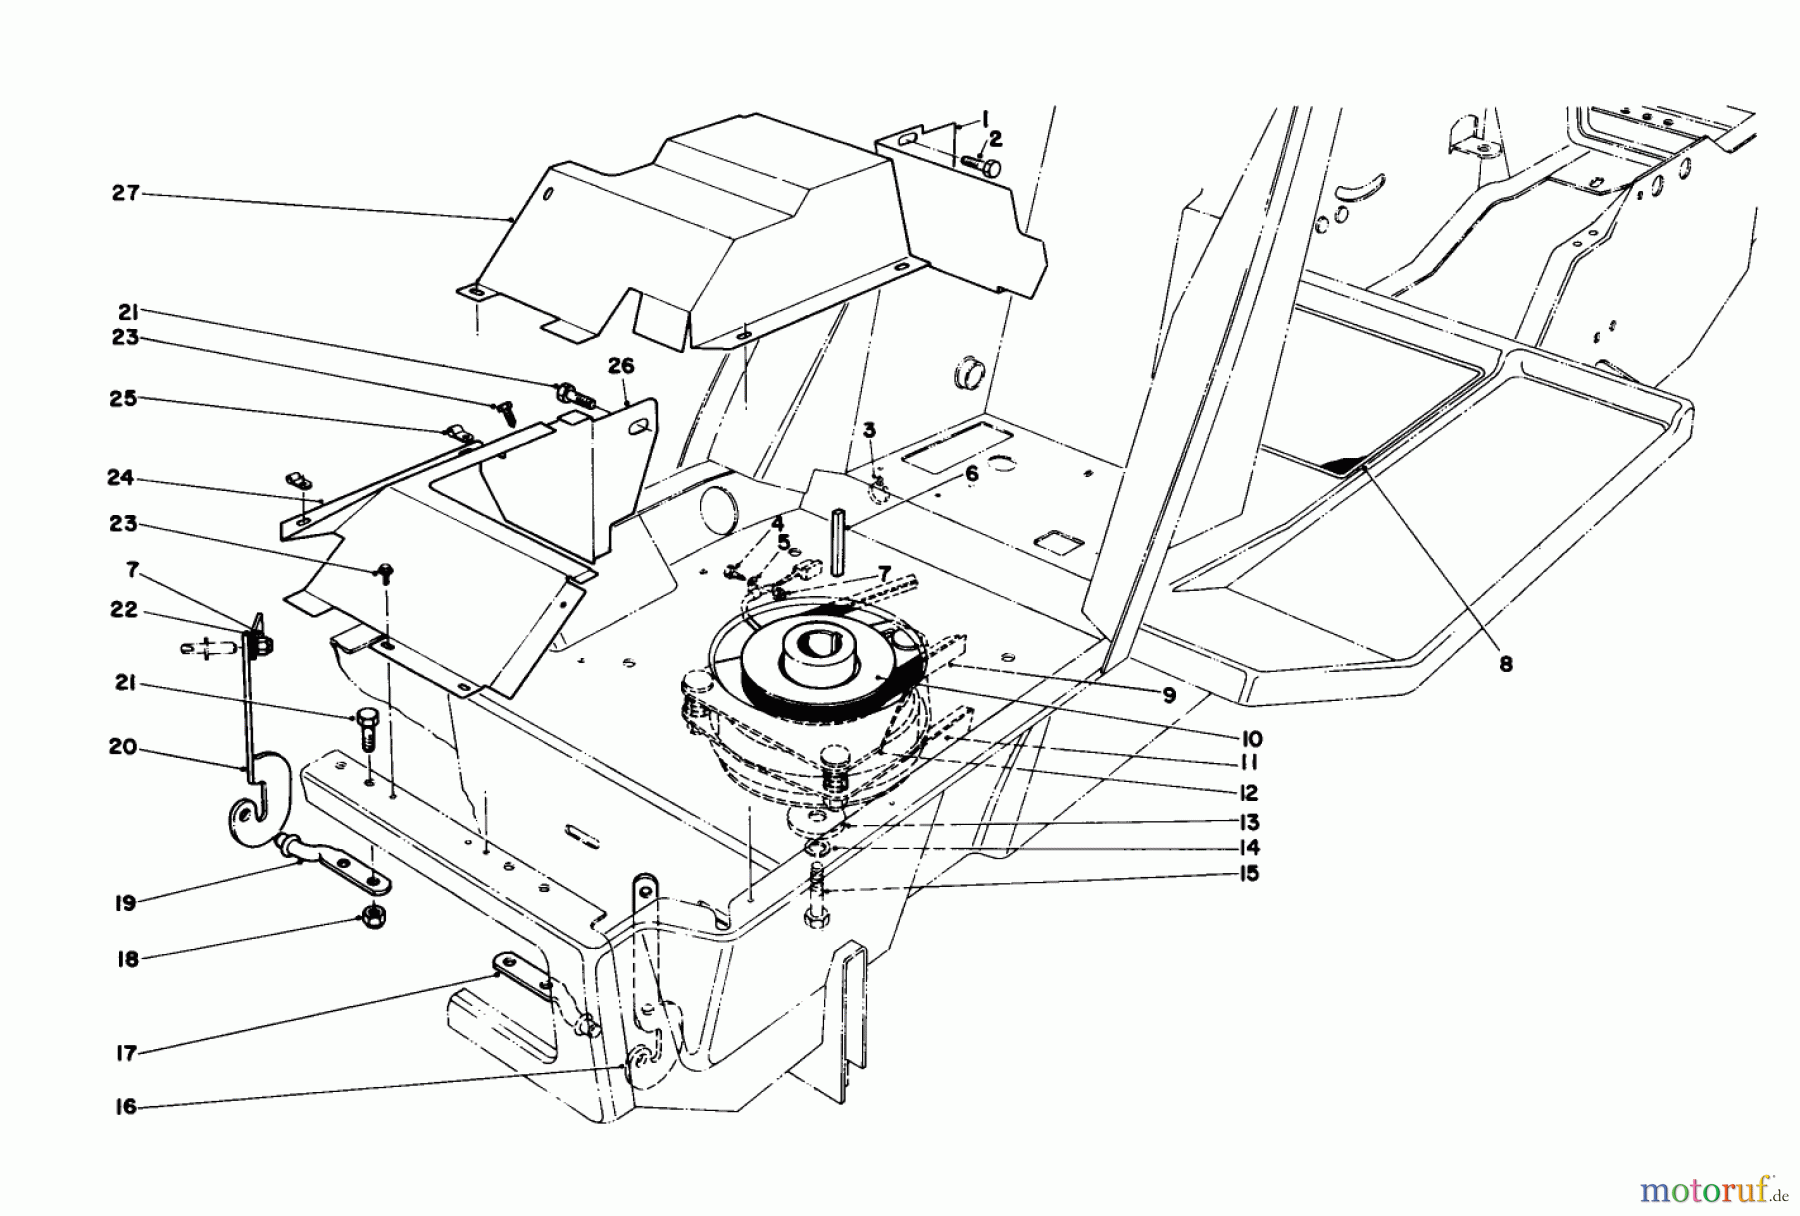  Toro Neu Mowers, Lawn & Garden Tractor Seite 1 57300 (8-32) - Toro 8-32 Front Engine Rider, 1984 (4000001-4999999) CLUTCH & PULLEY ASSEMBLY